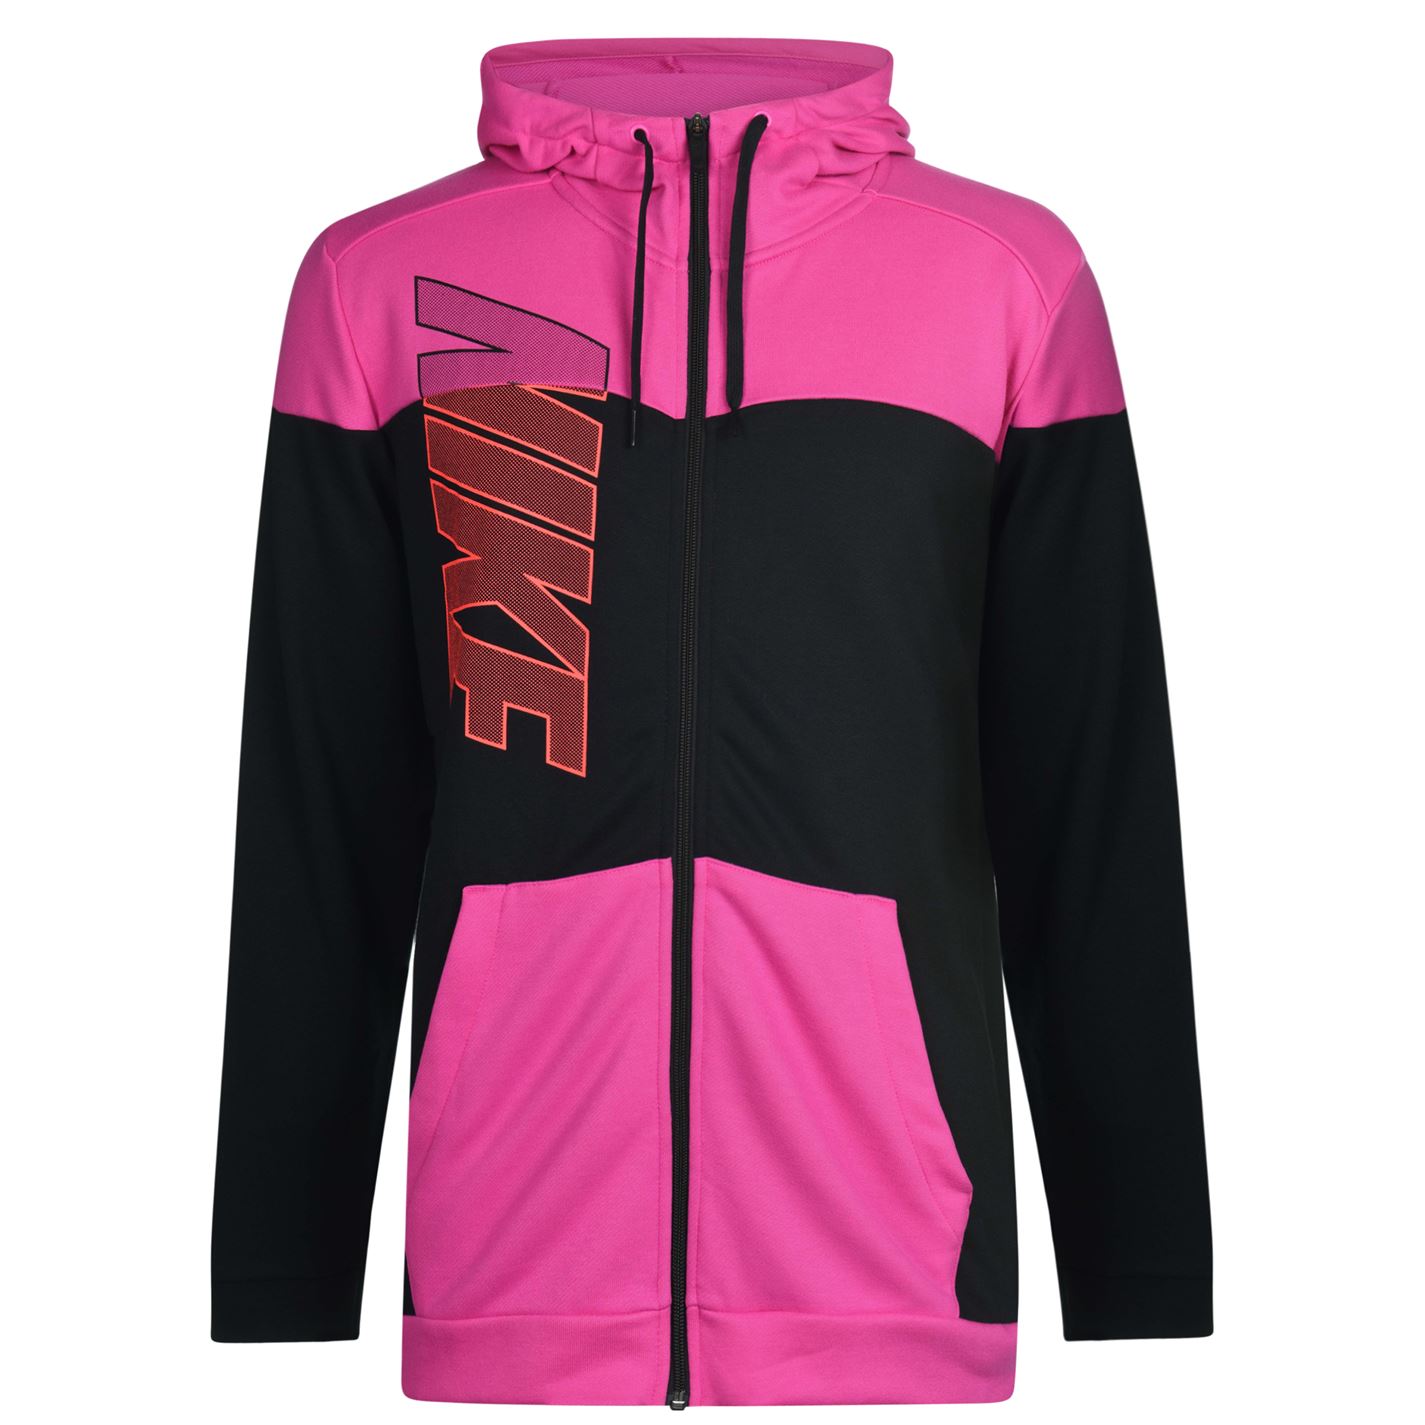 Bluze Hanorac Nike Performance pentru Barbati roz negru